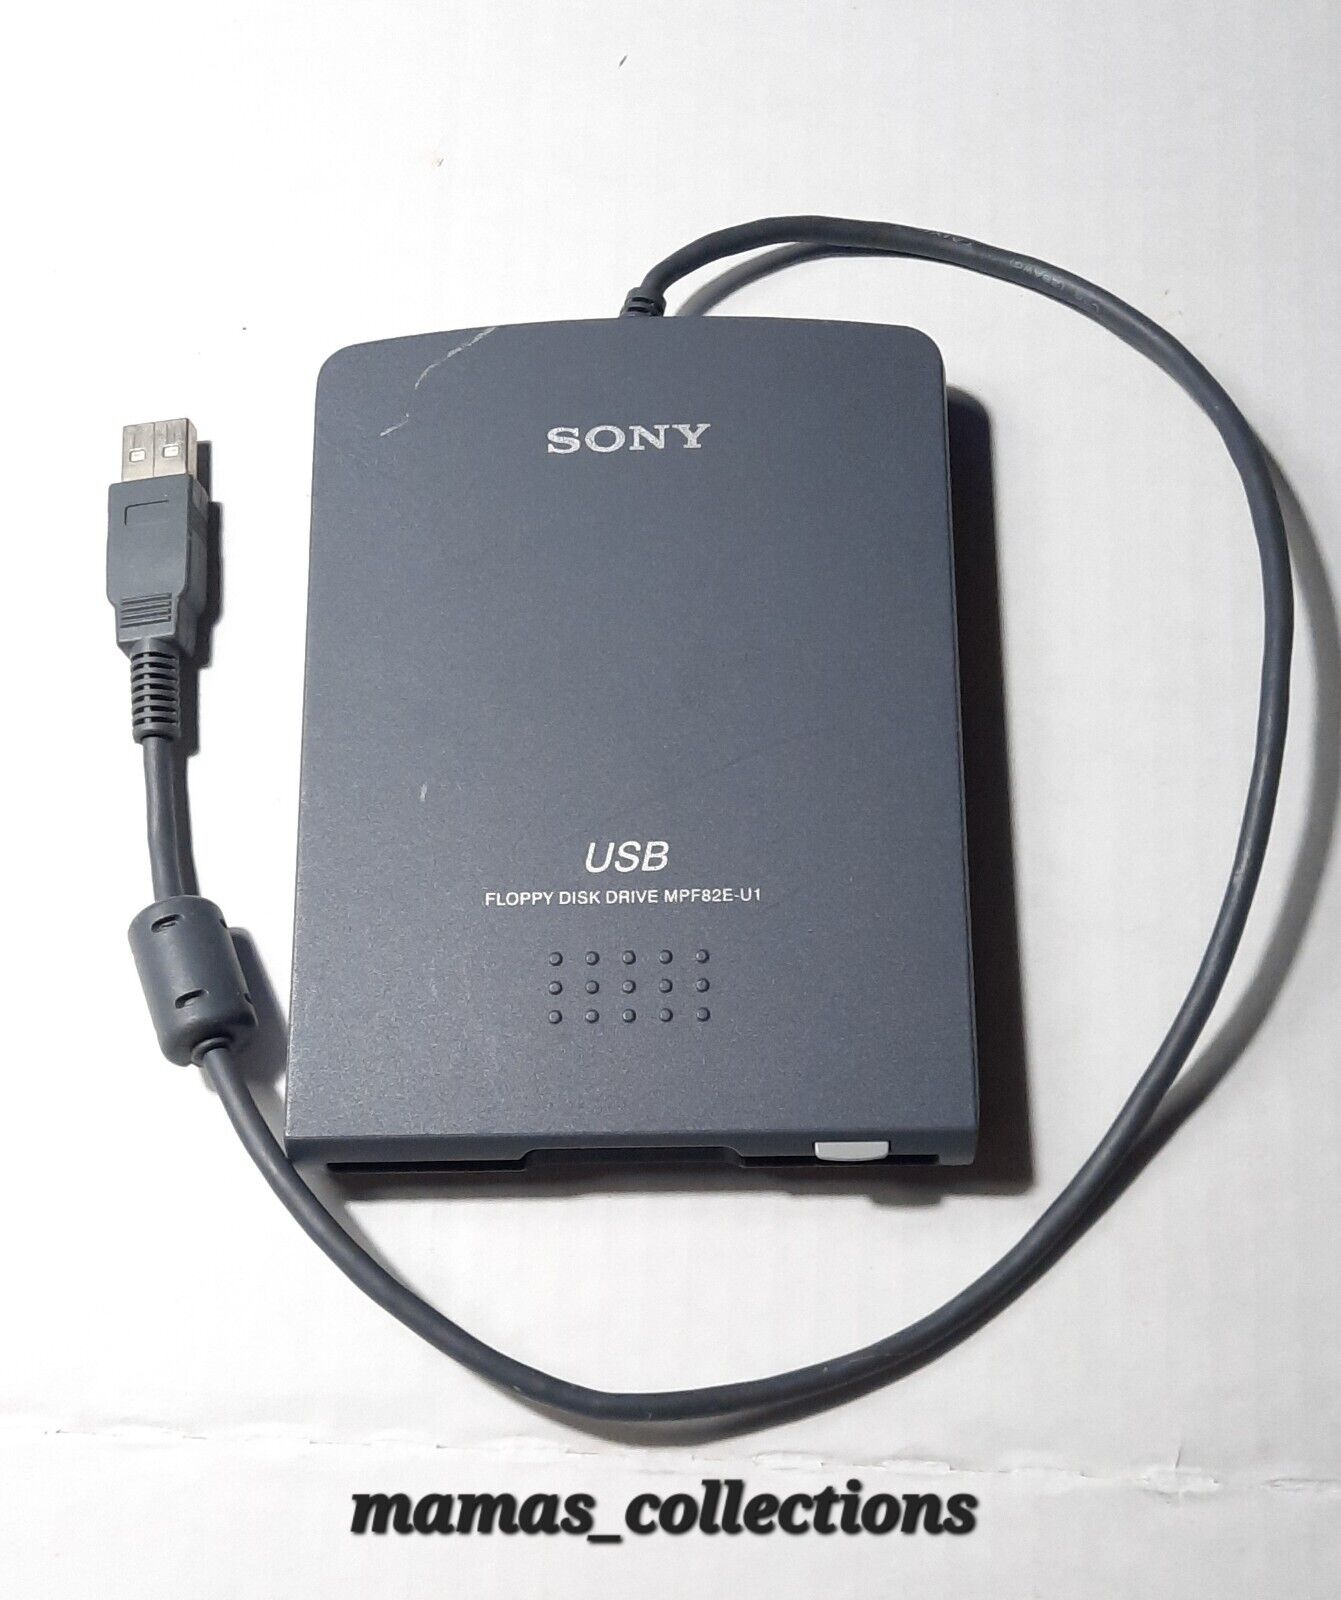 Sony External USB Floppy Disk Drive- 1.44MB, Model MPF82E-U1 for Windows and Mac